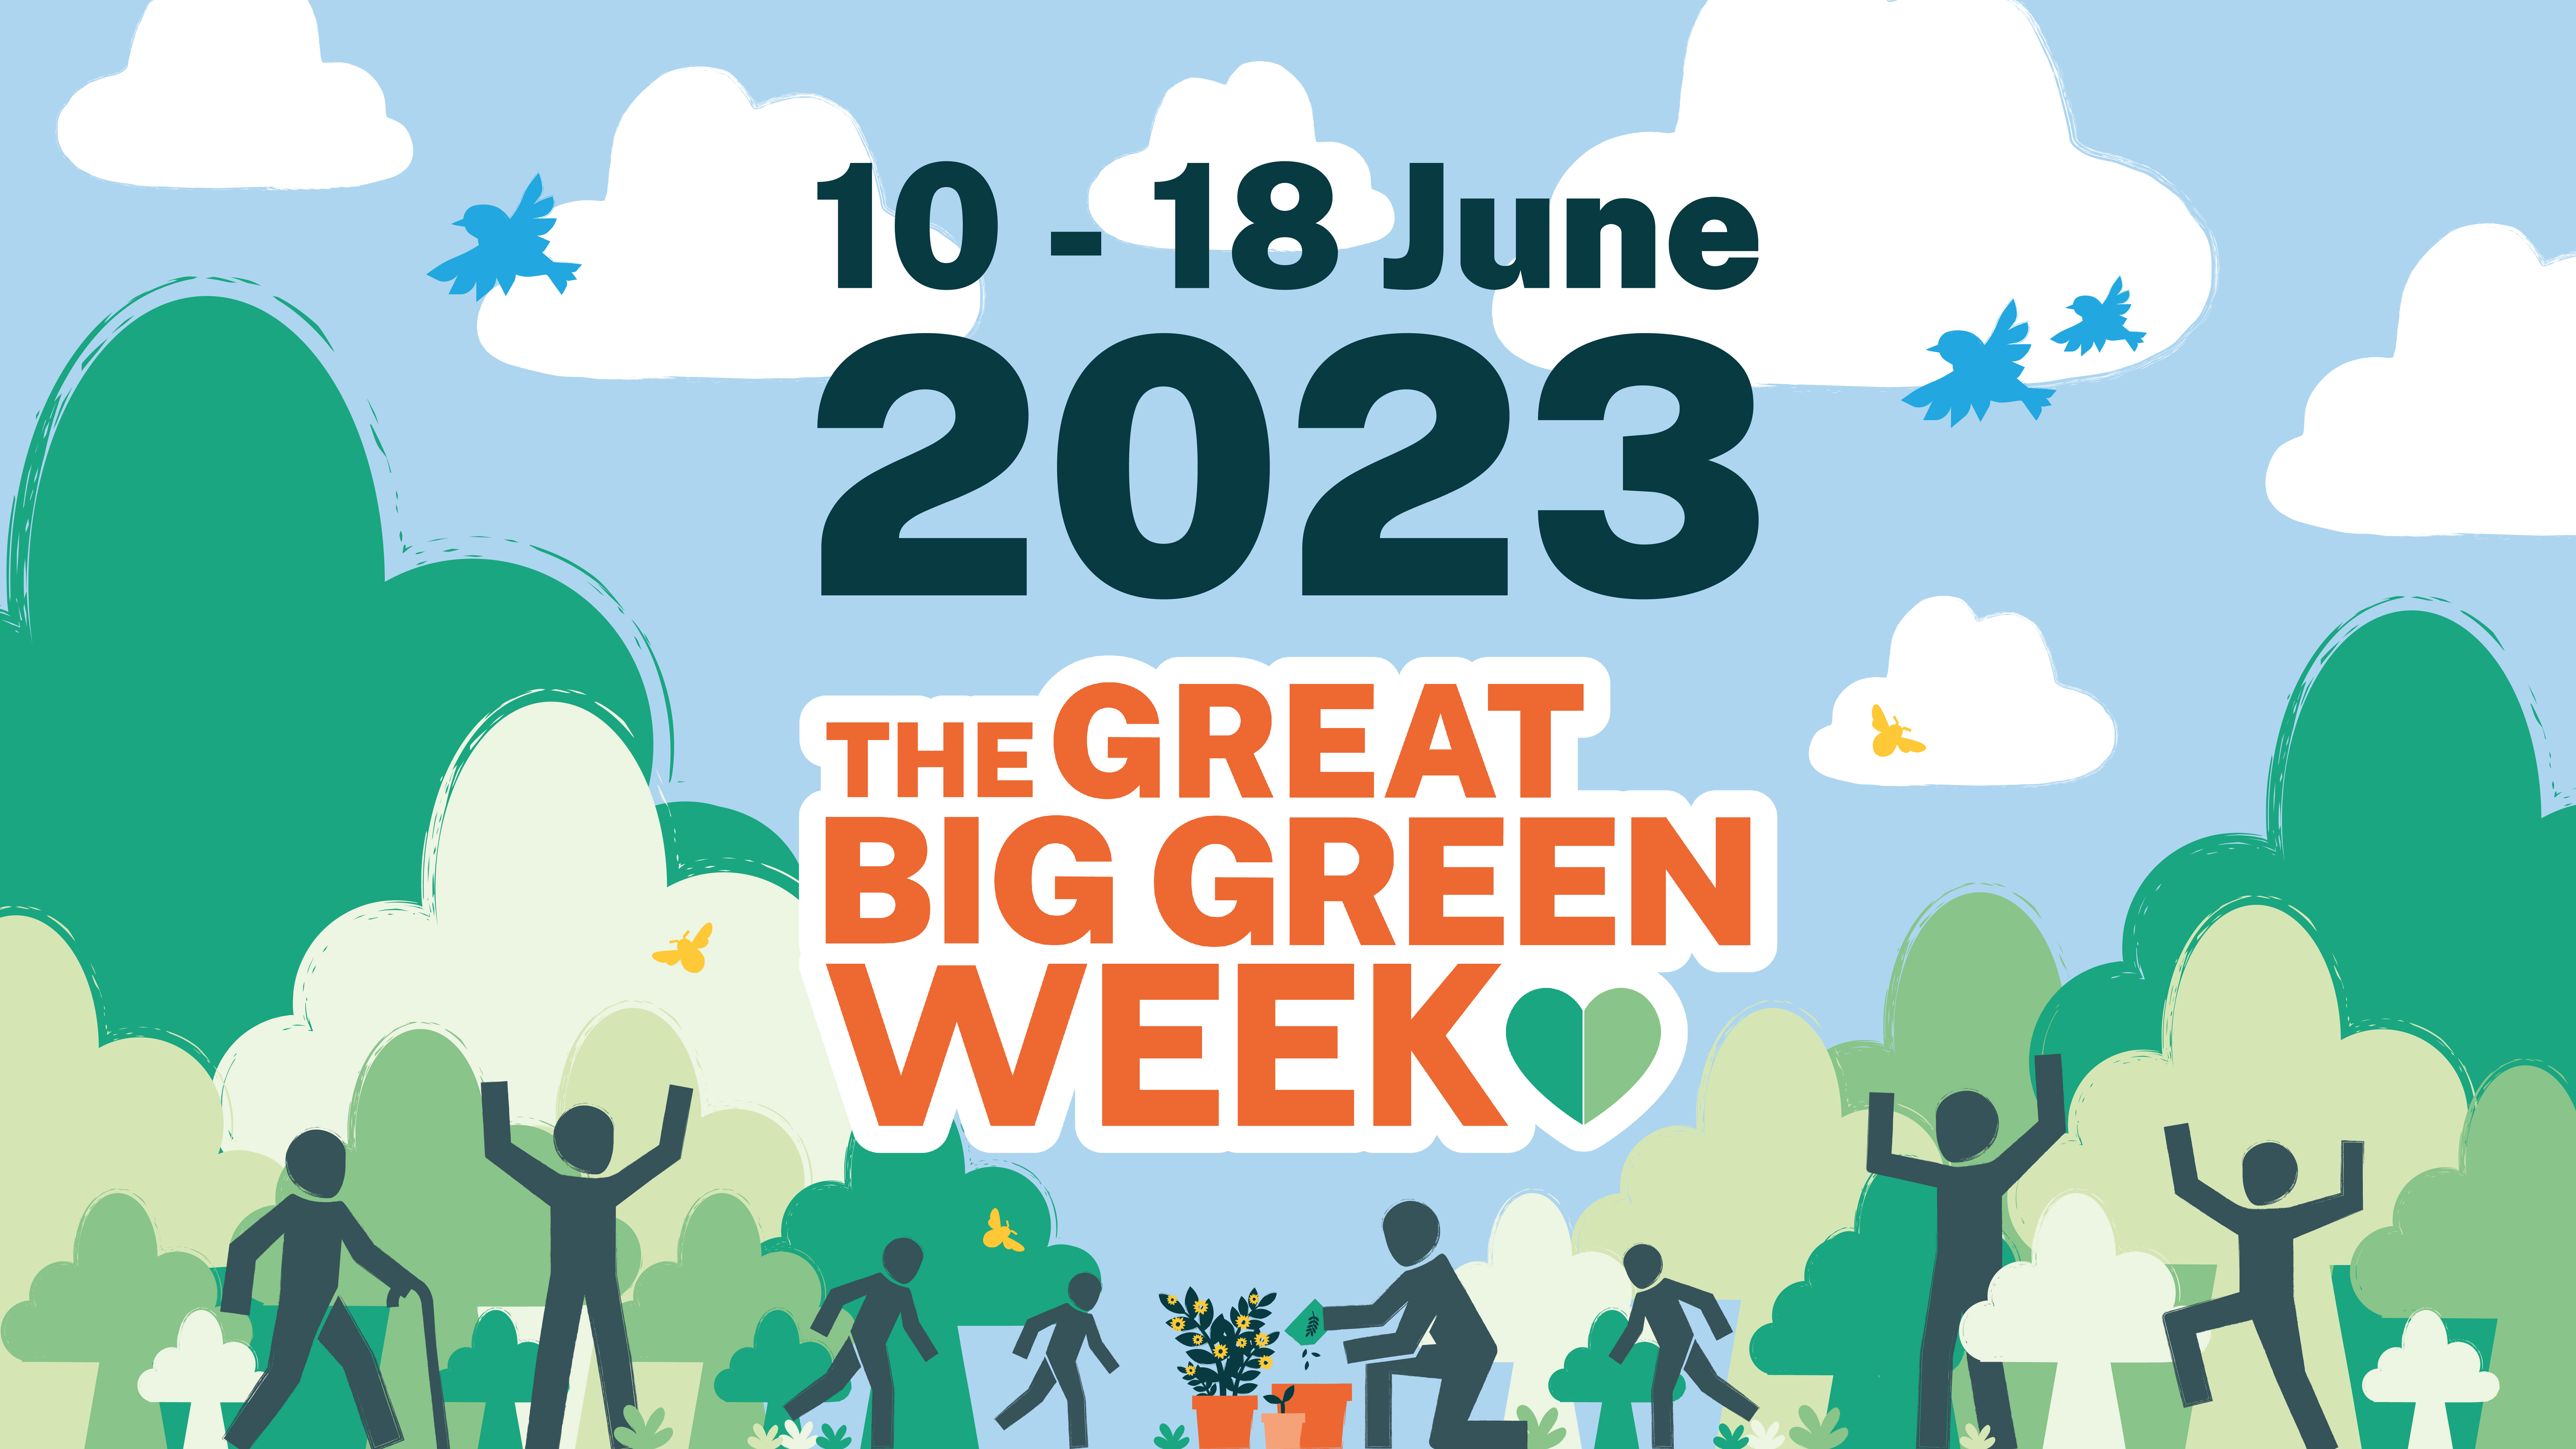 PRESS RELEASE: The Great Big Green Week